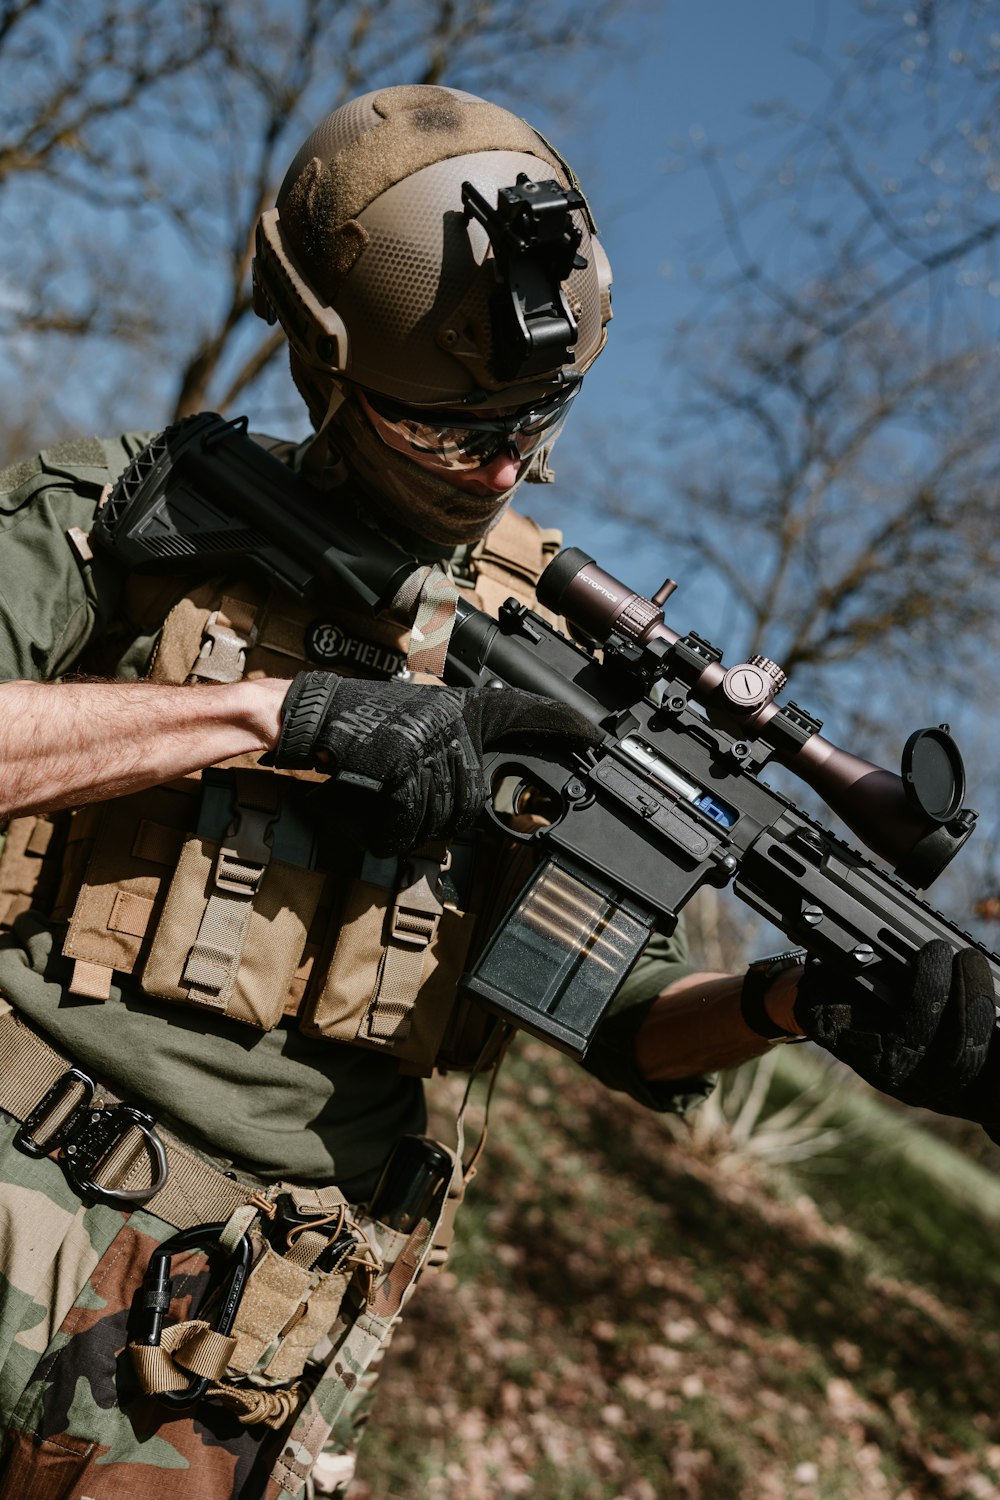 a man in camouflage holding a machine gun